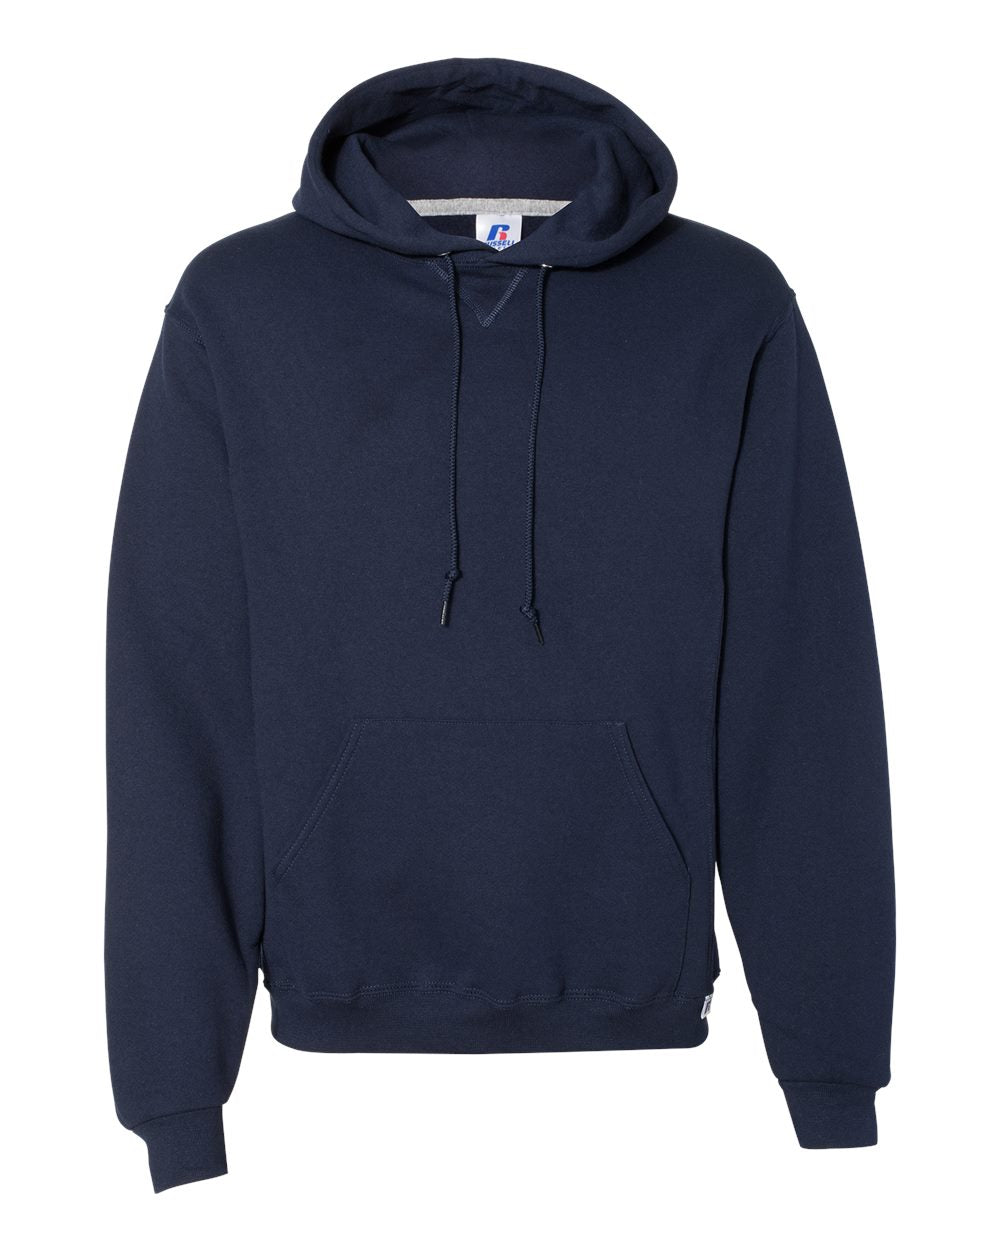 Russell Athletic Dri Power® Hooded Sweatshirt 695HBM #color_Navy